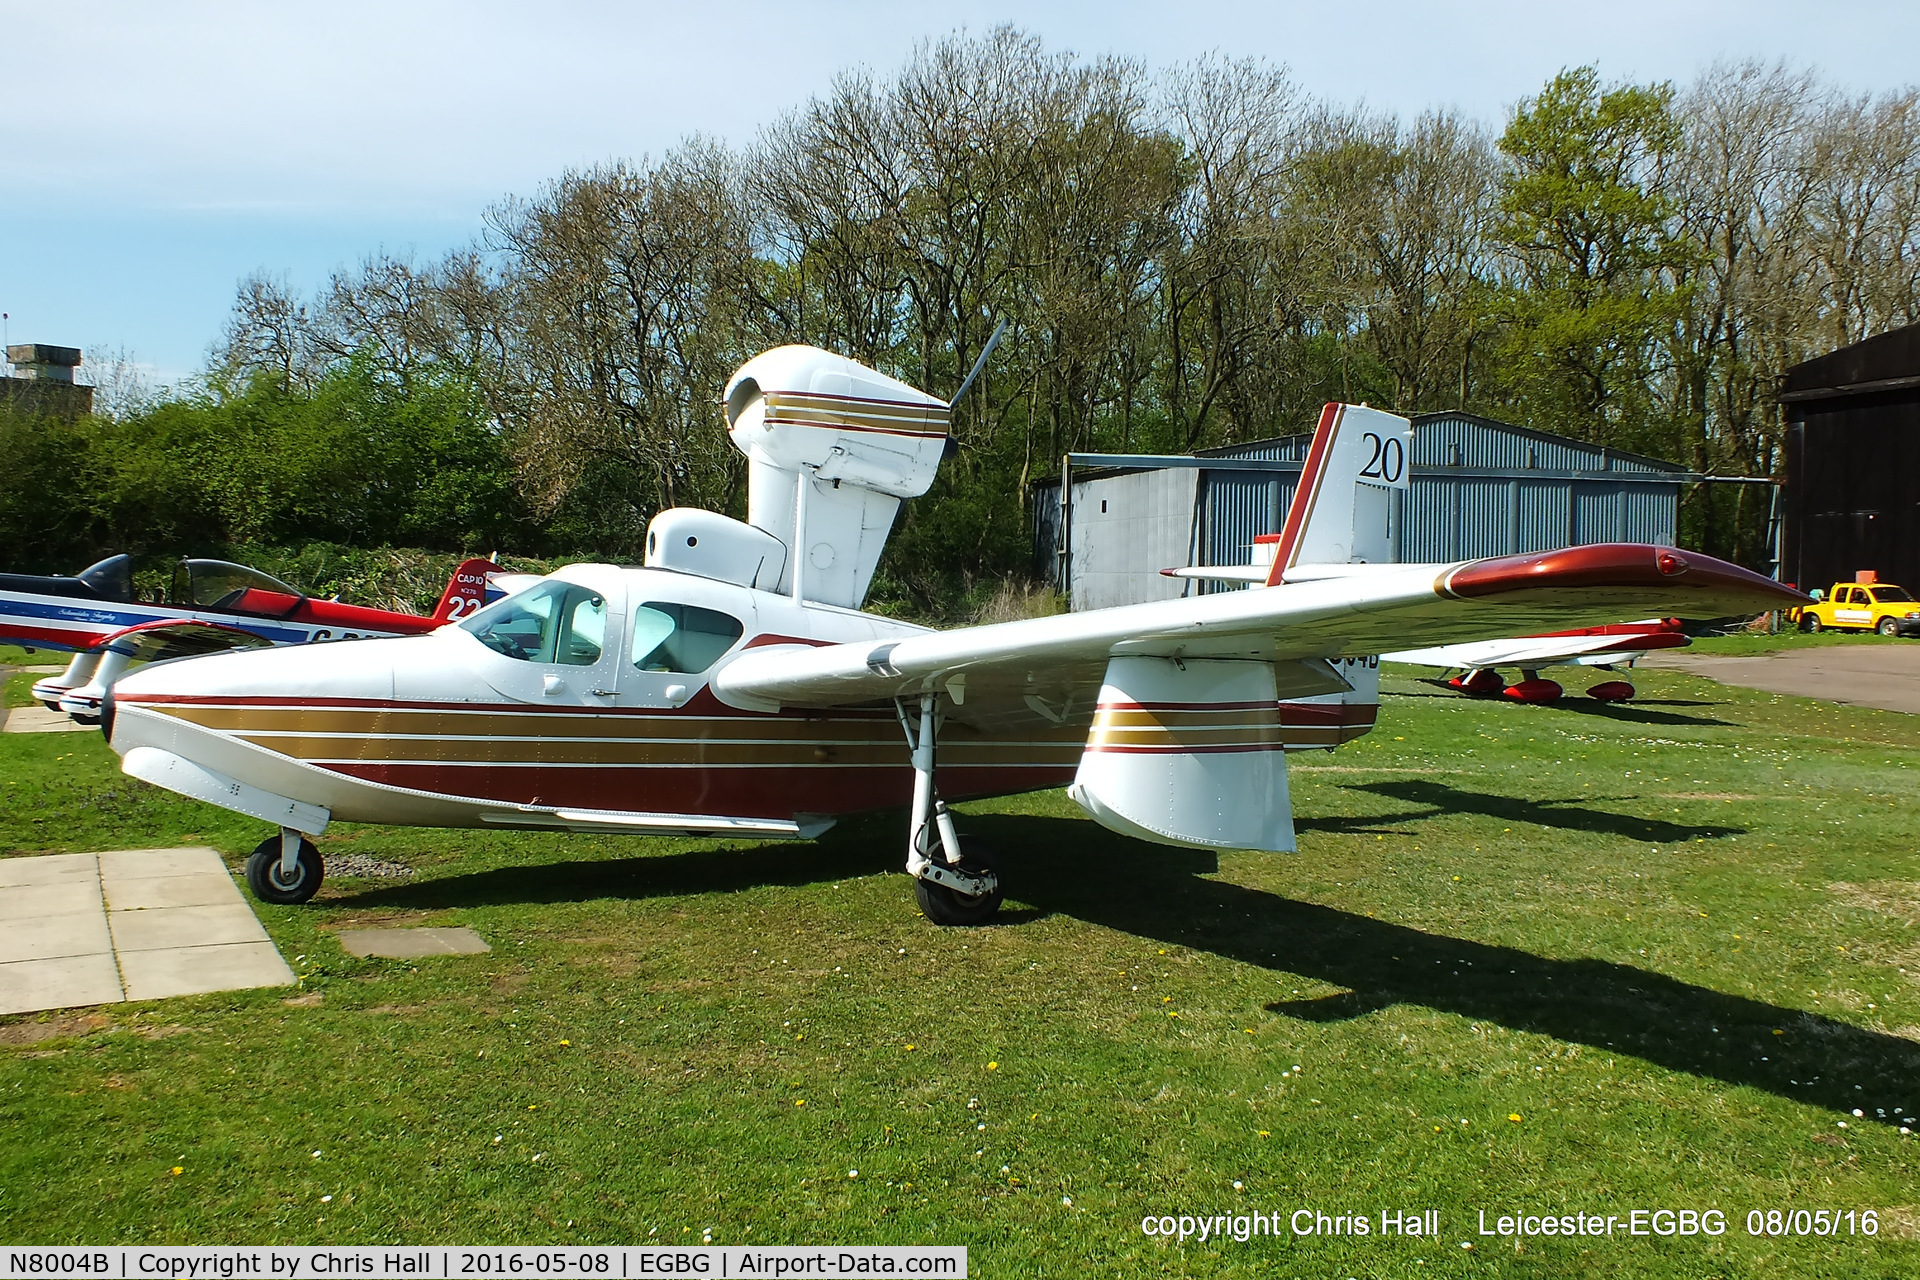 N8004B, 1980 Consolidated Aeronautics Inc. Lake LA-4-200 C/N 1022, Royal Aero Club air race at Leicester